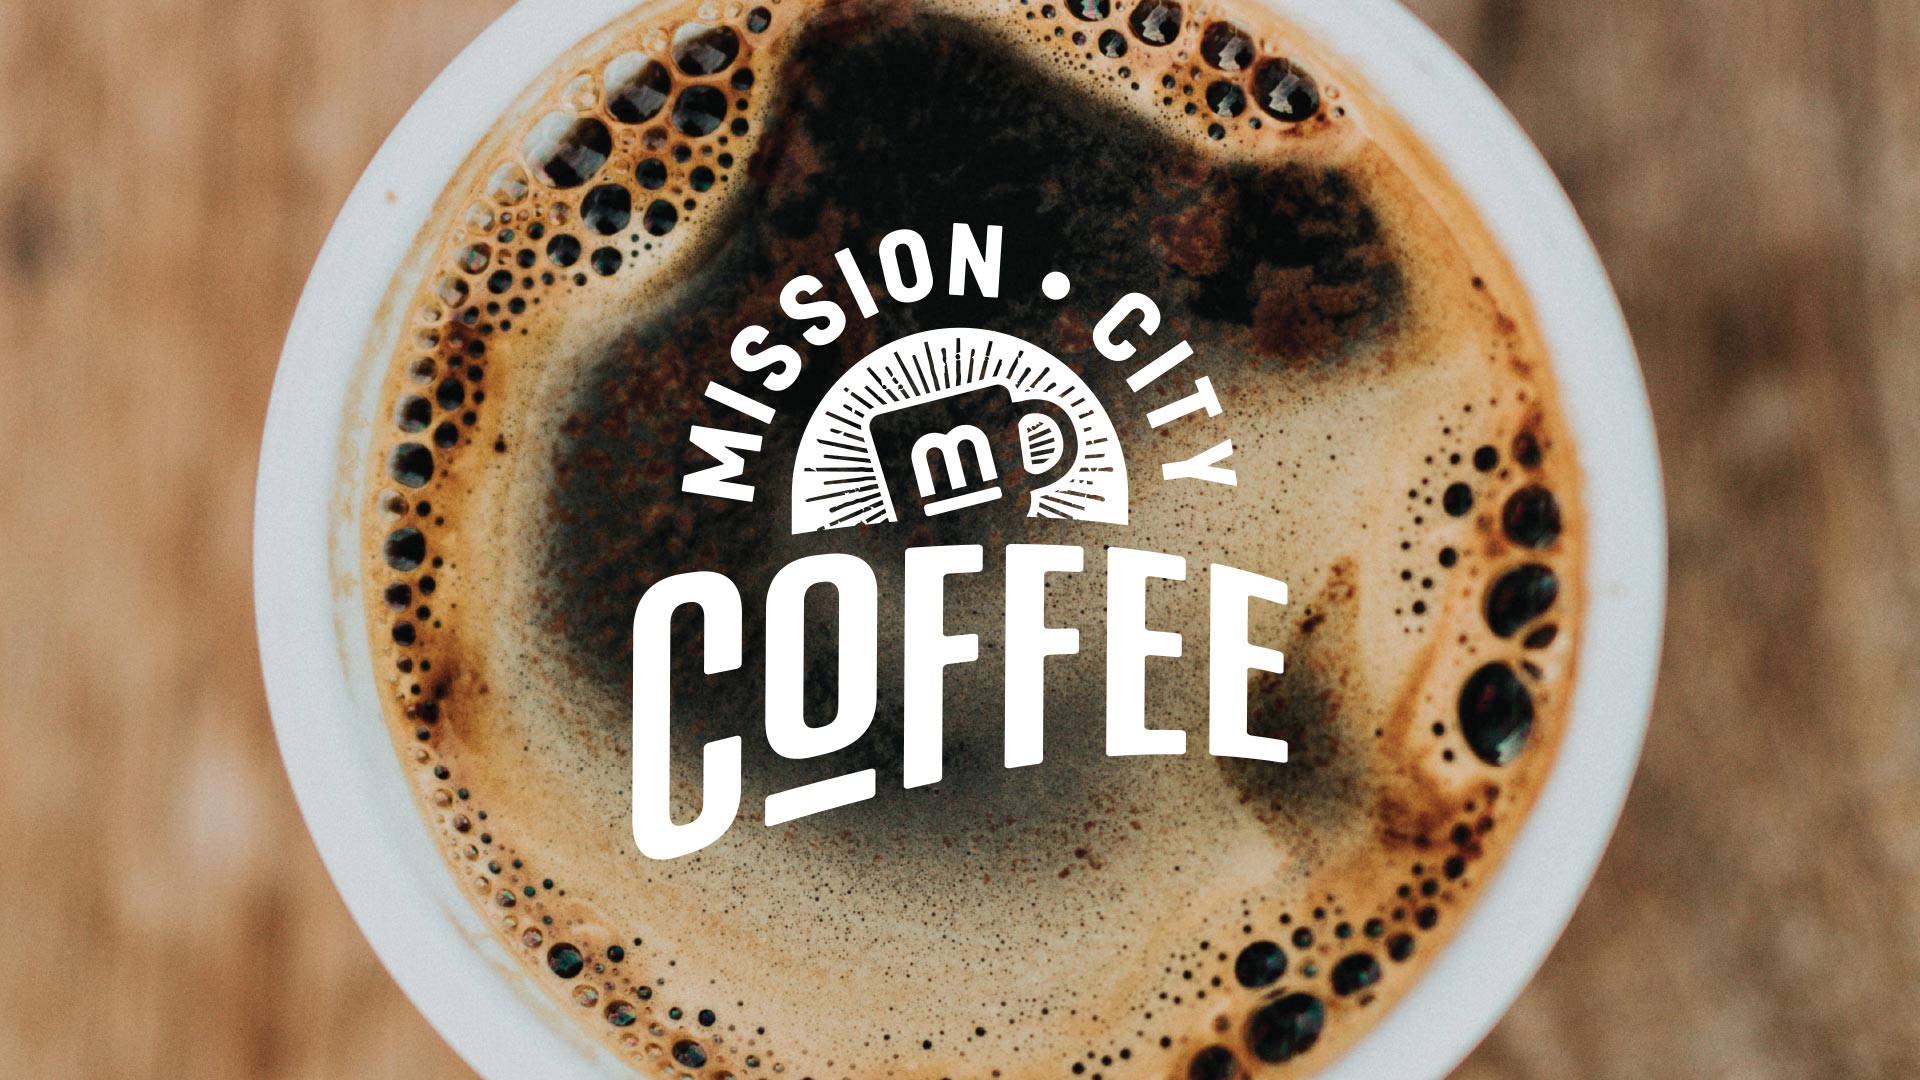 Mission City Coffee